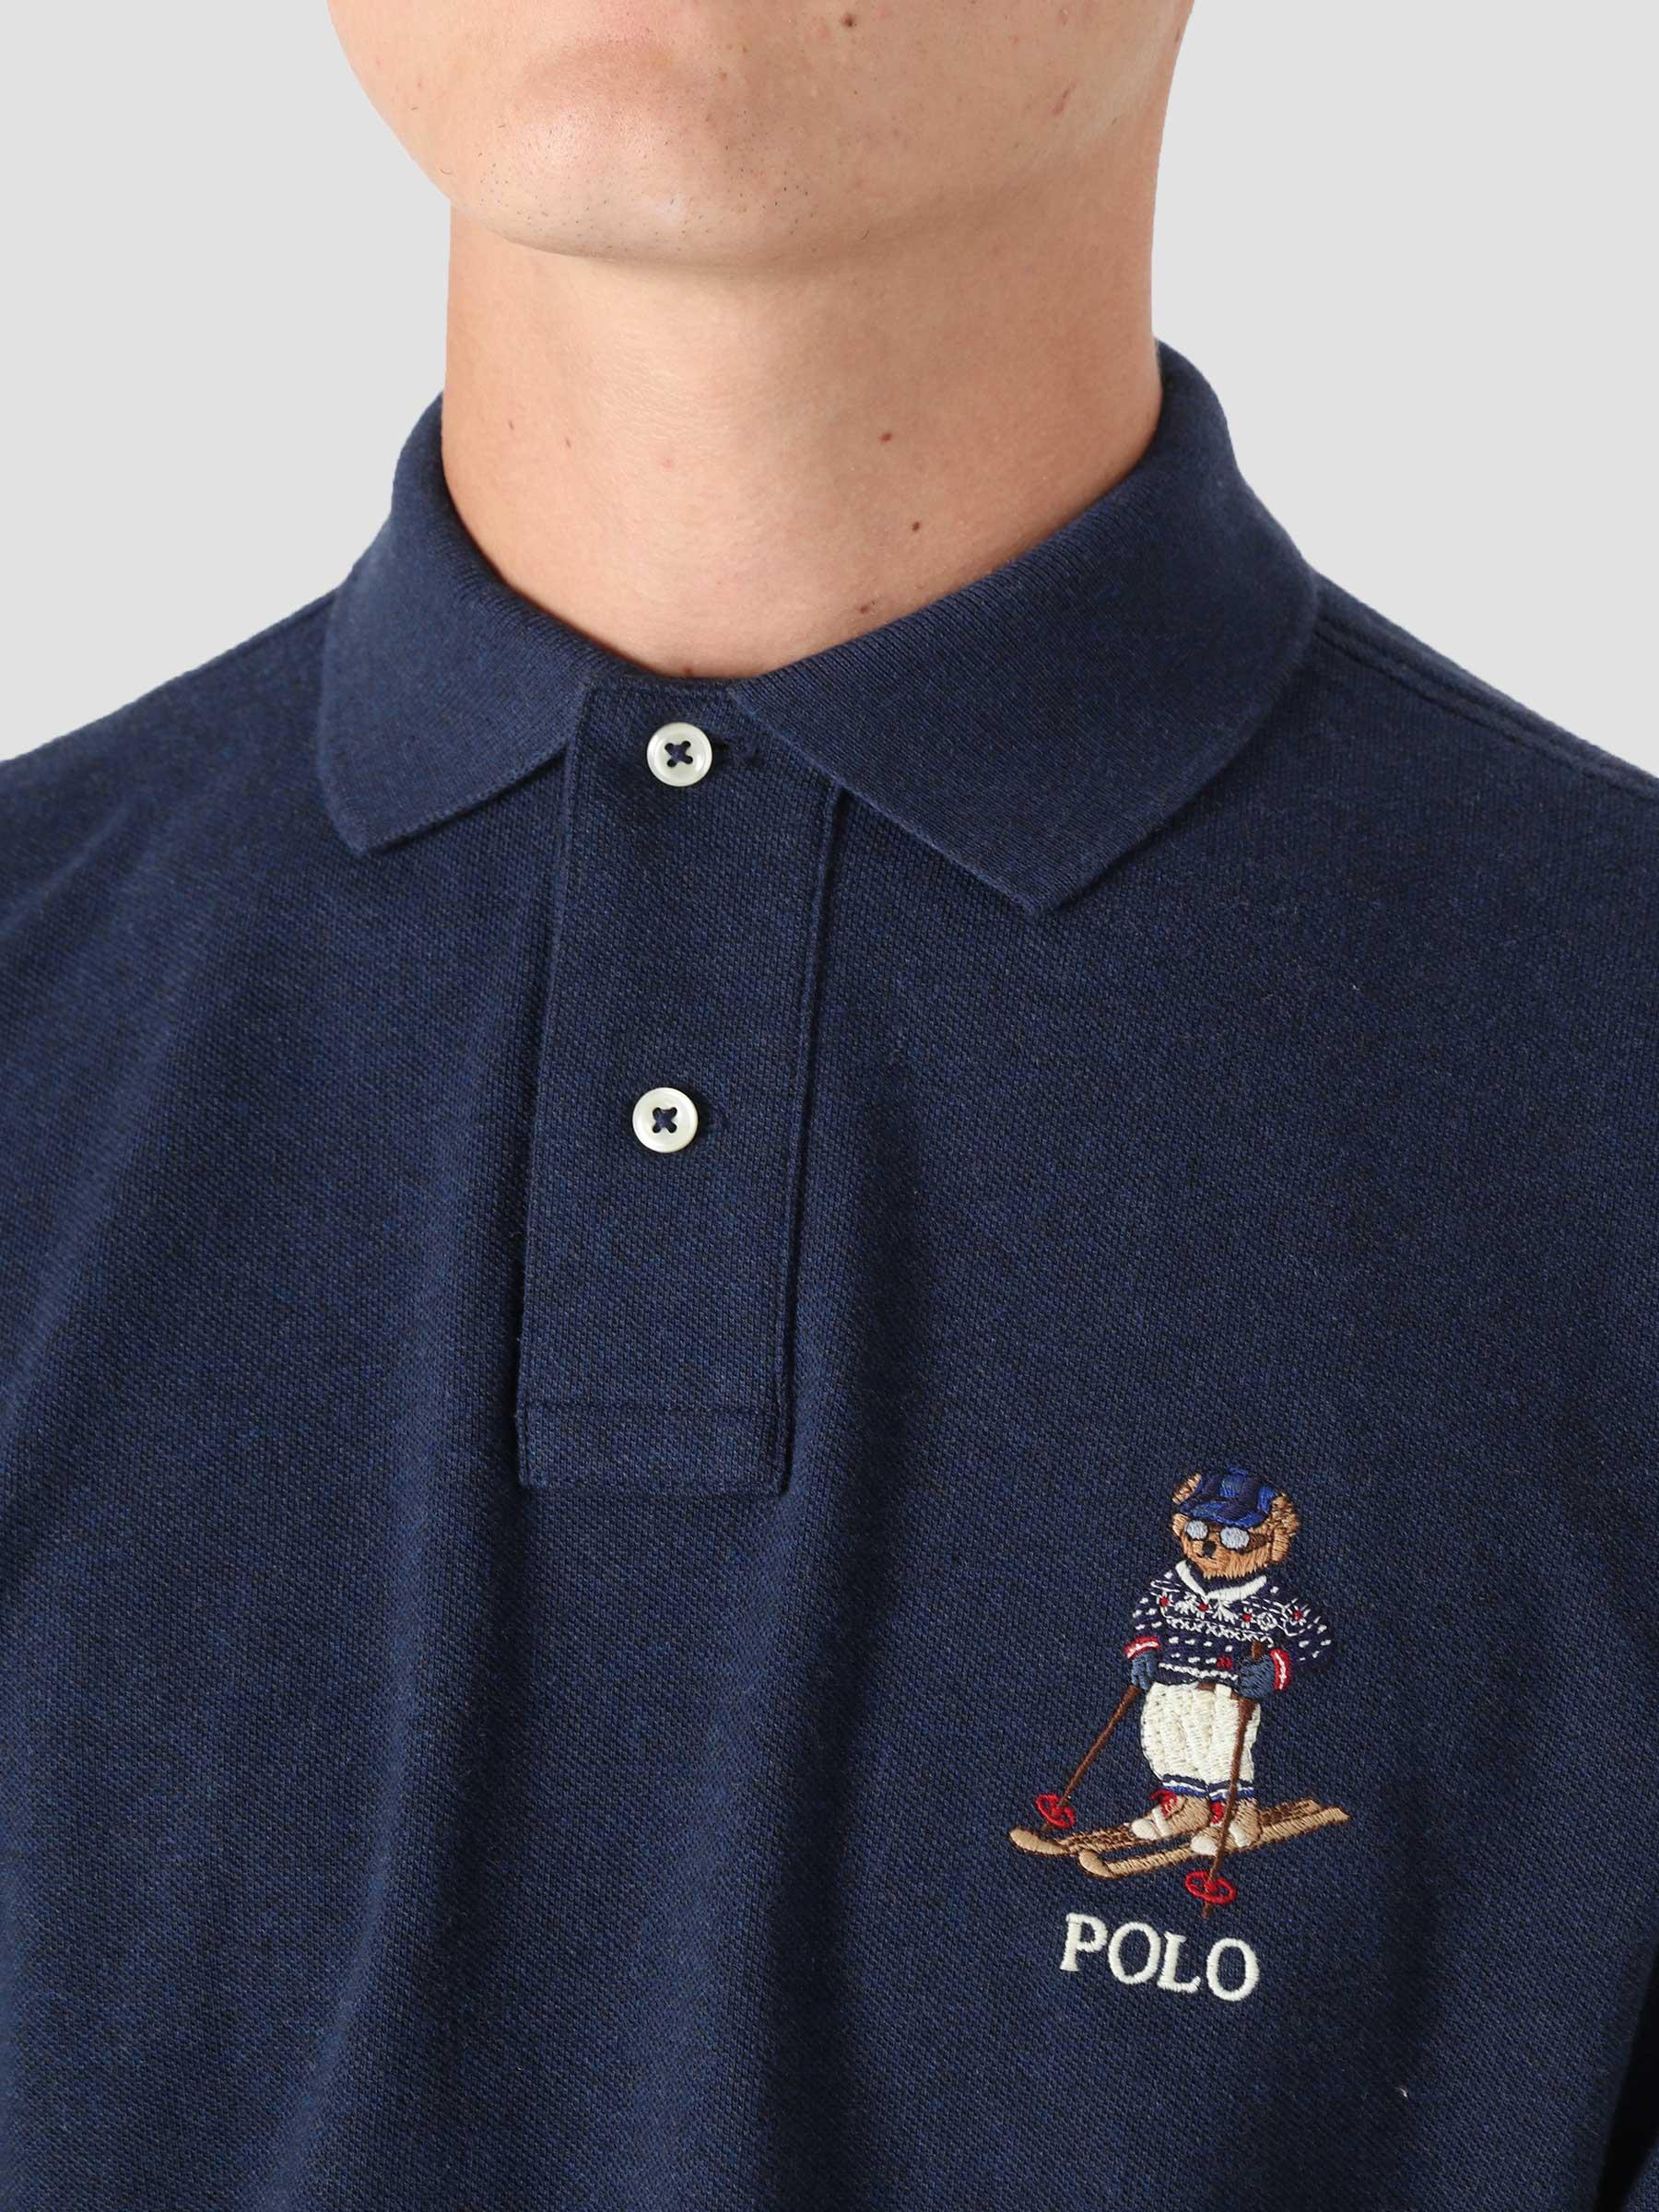 20-1 Mesh Long Sleeve Polo Shirt Medieval Blue Heather 710853322001